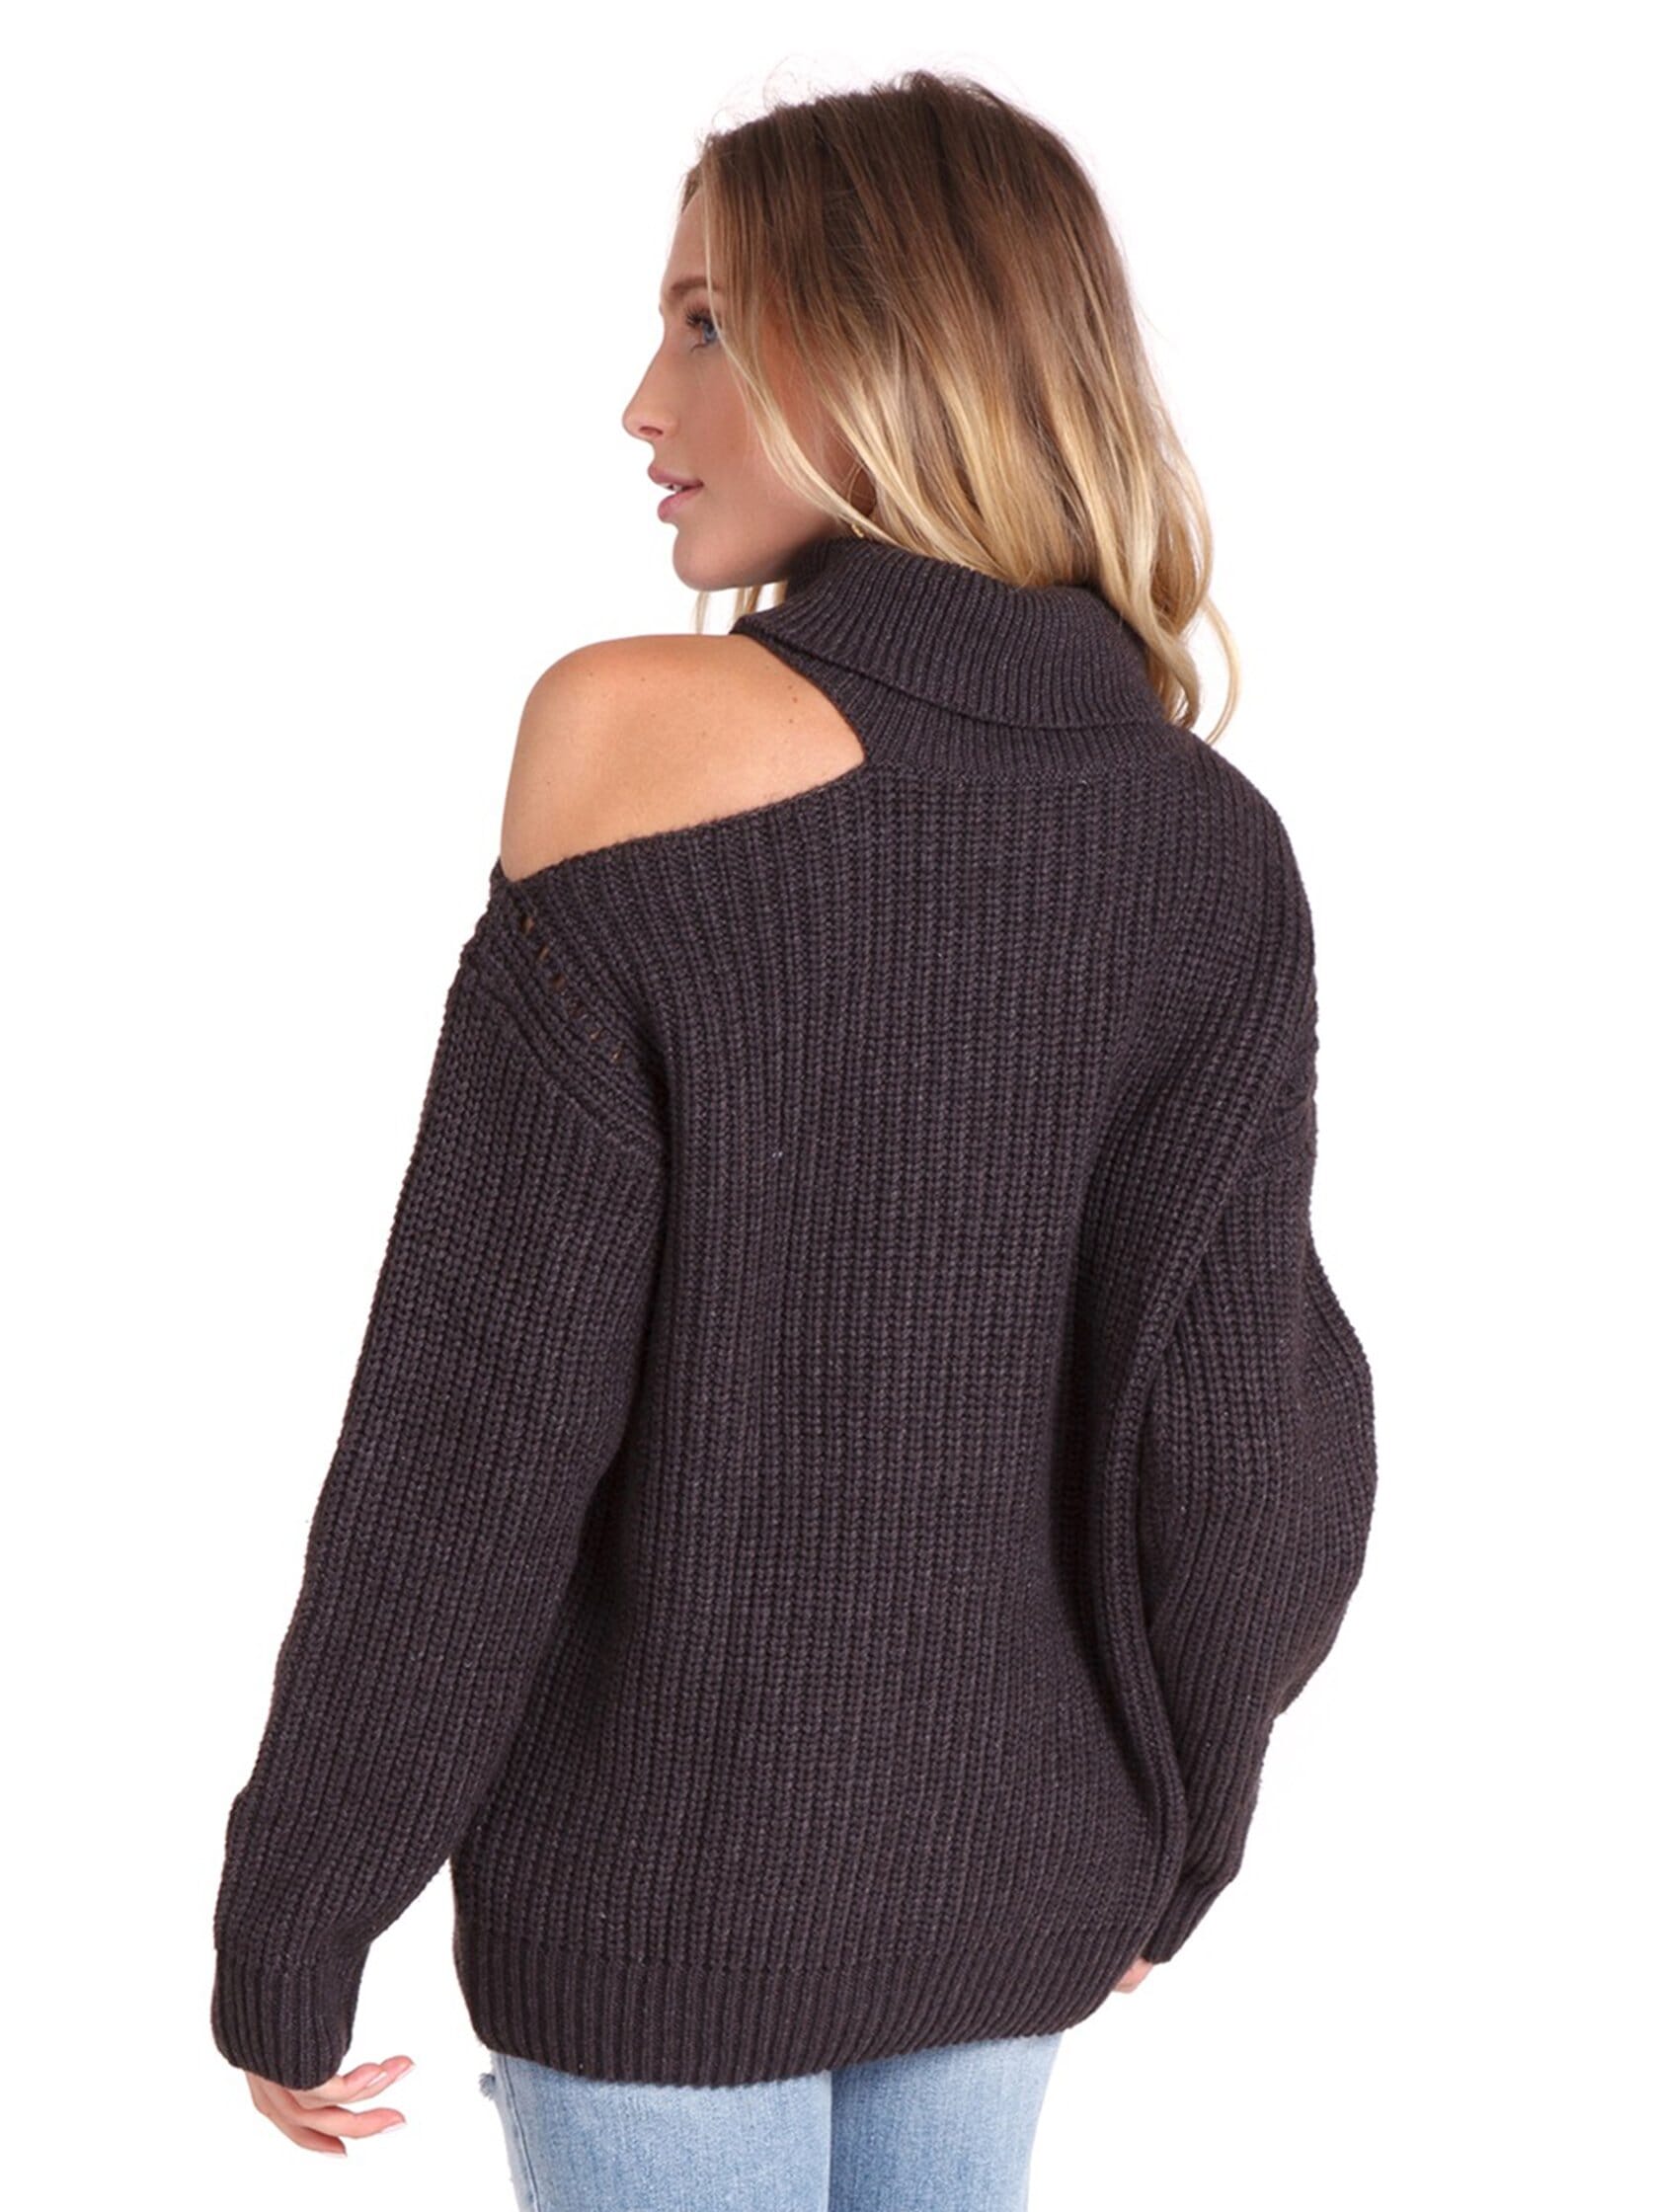 ASTR Sepulveda Sweater in Charcoal